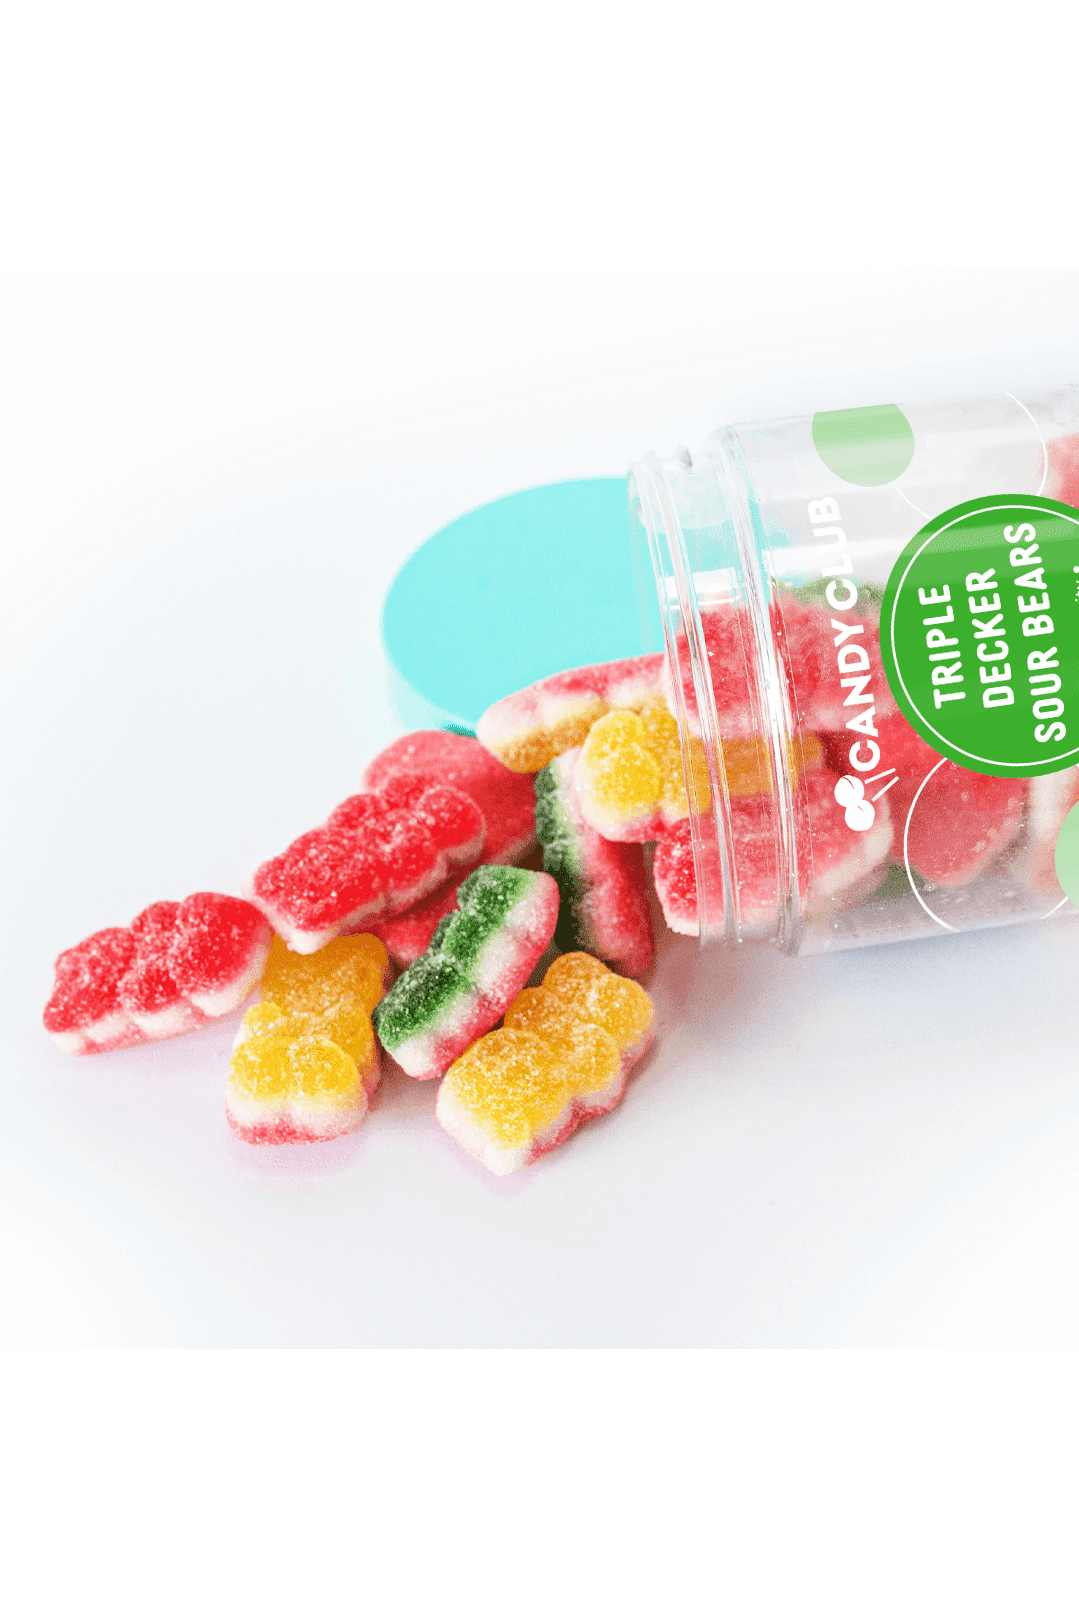 Triple-Decker Candy Sour Gummy Bears Tea for Three: A Children's Boutique